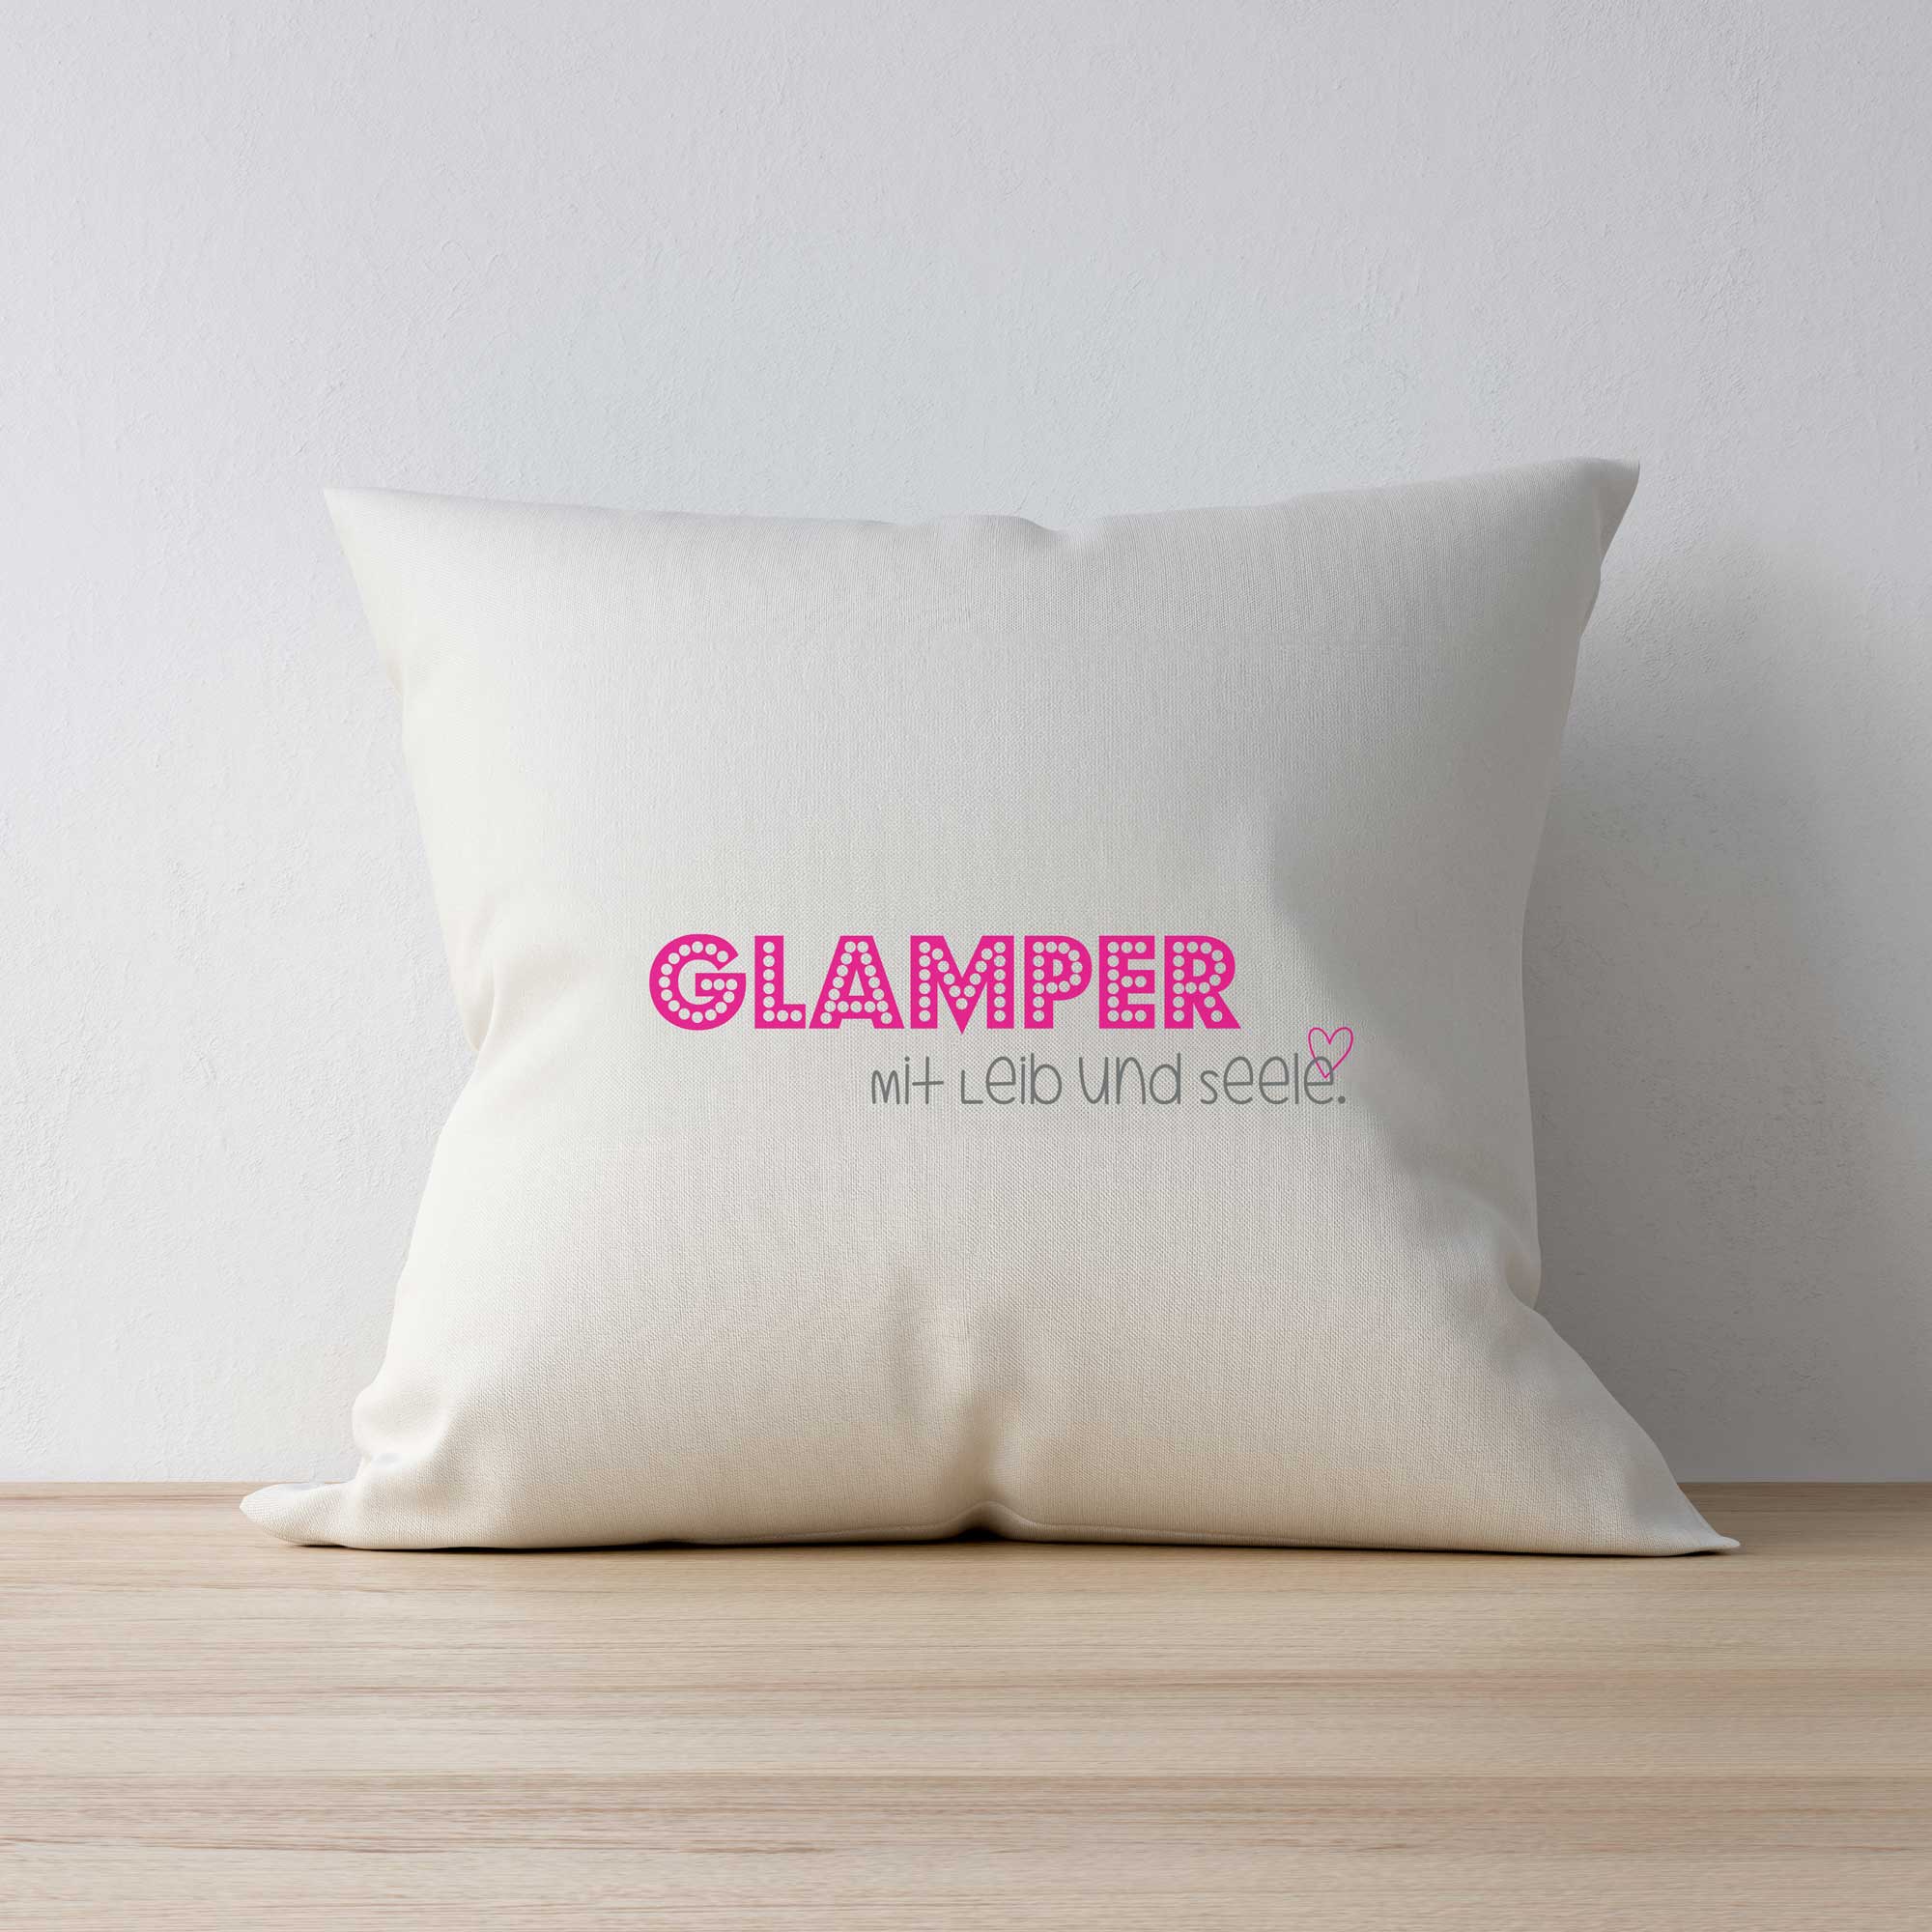 Camping cushion "Glamper"